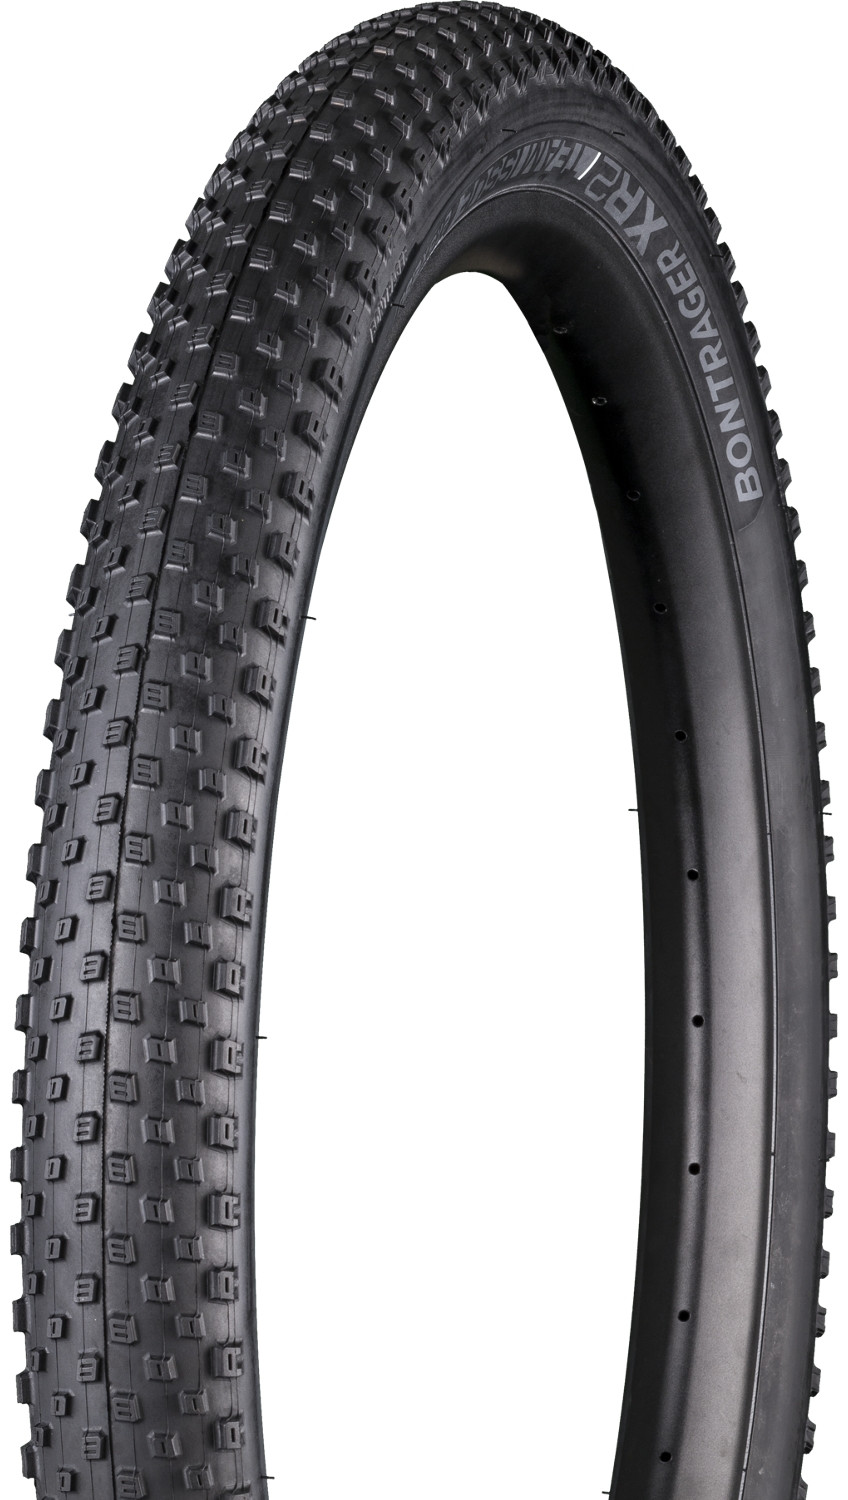 Bontrager XR2 Team Issue TLR MTB Tire - Off Road - Tyres - Parts - Shop ...